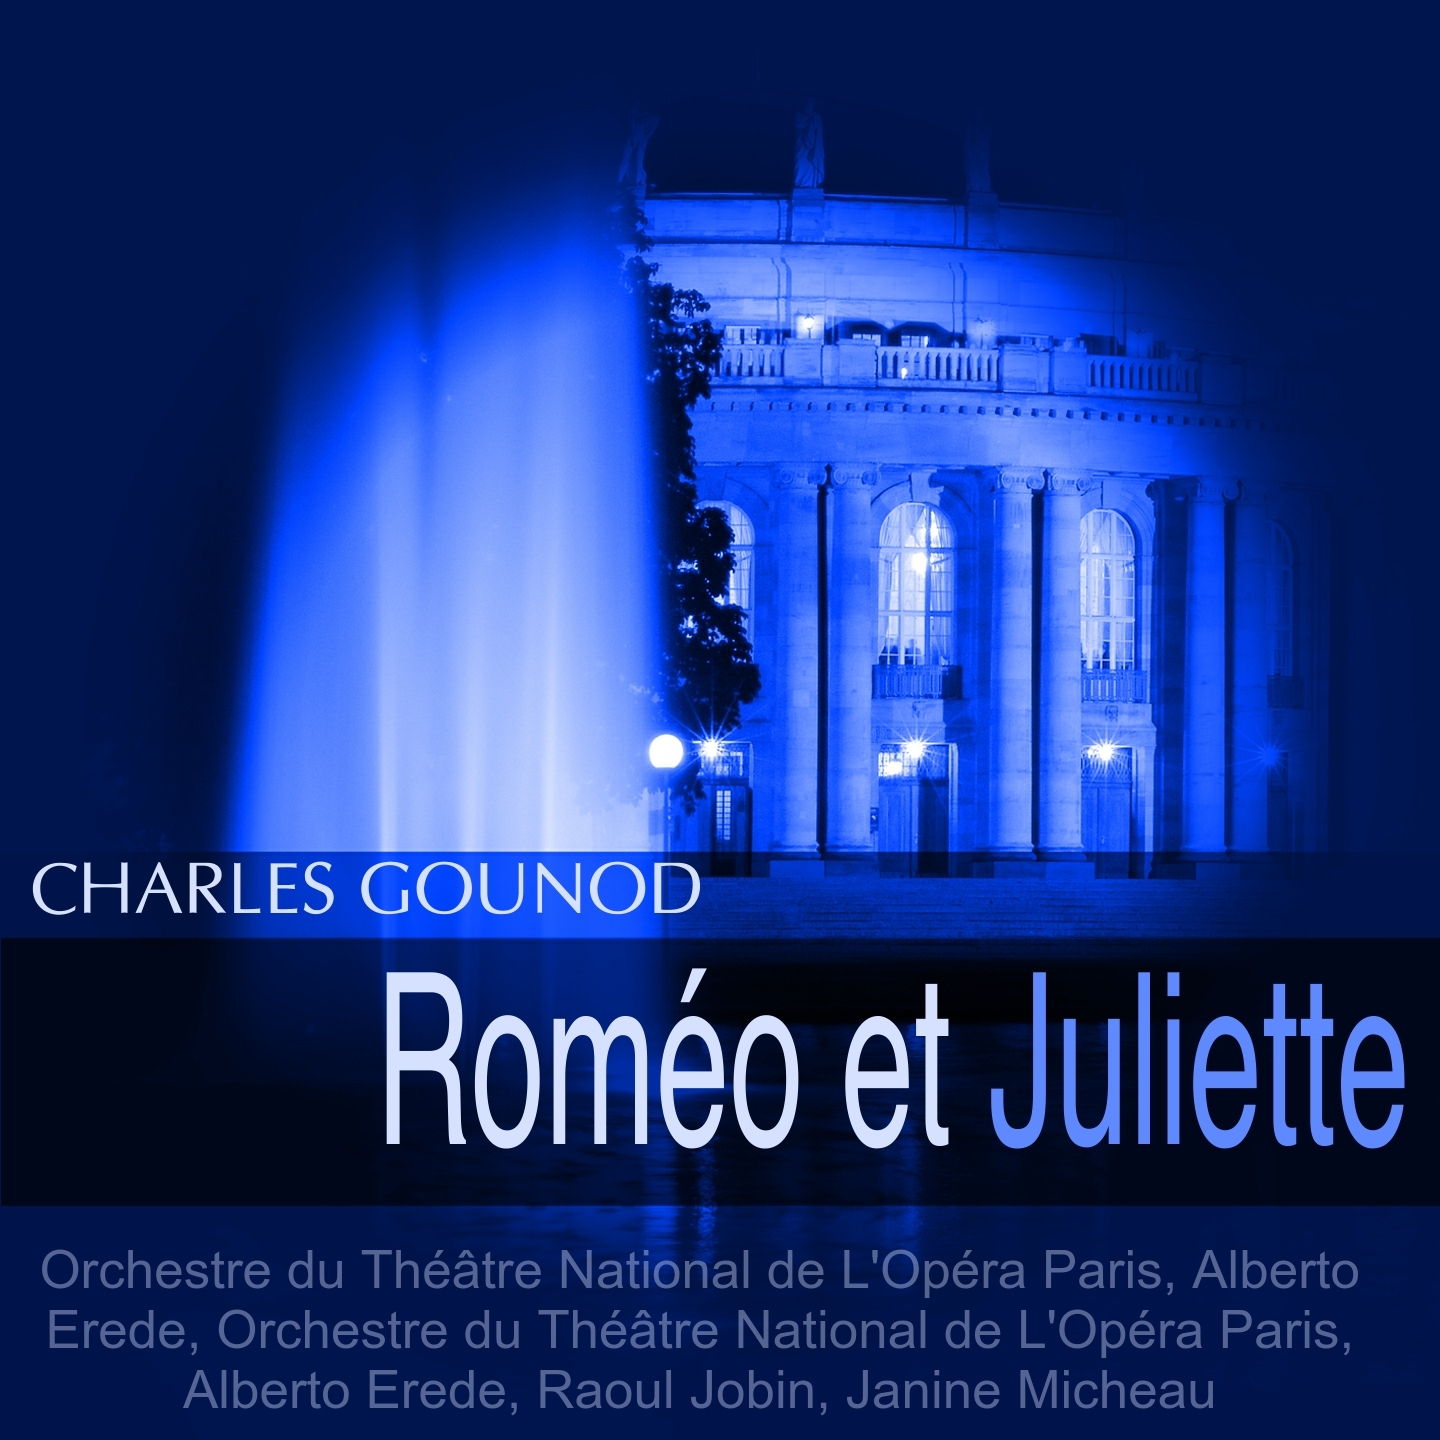 Rome o et Juliette, Act II: " O nuit devine! Je t' implore" Rome o